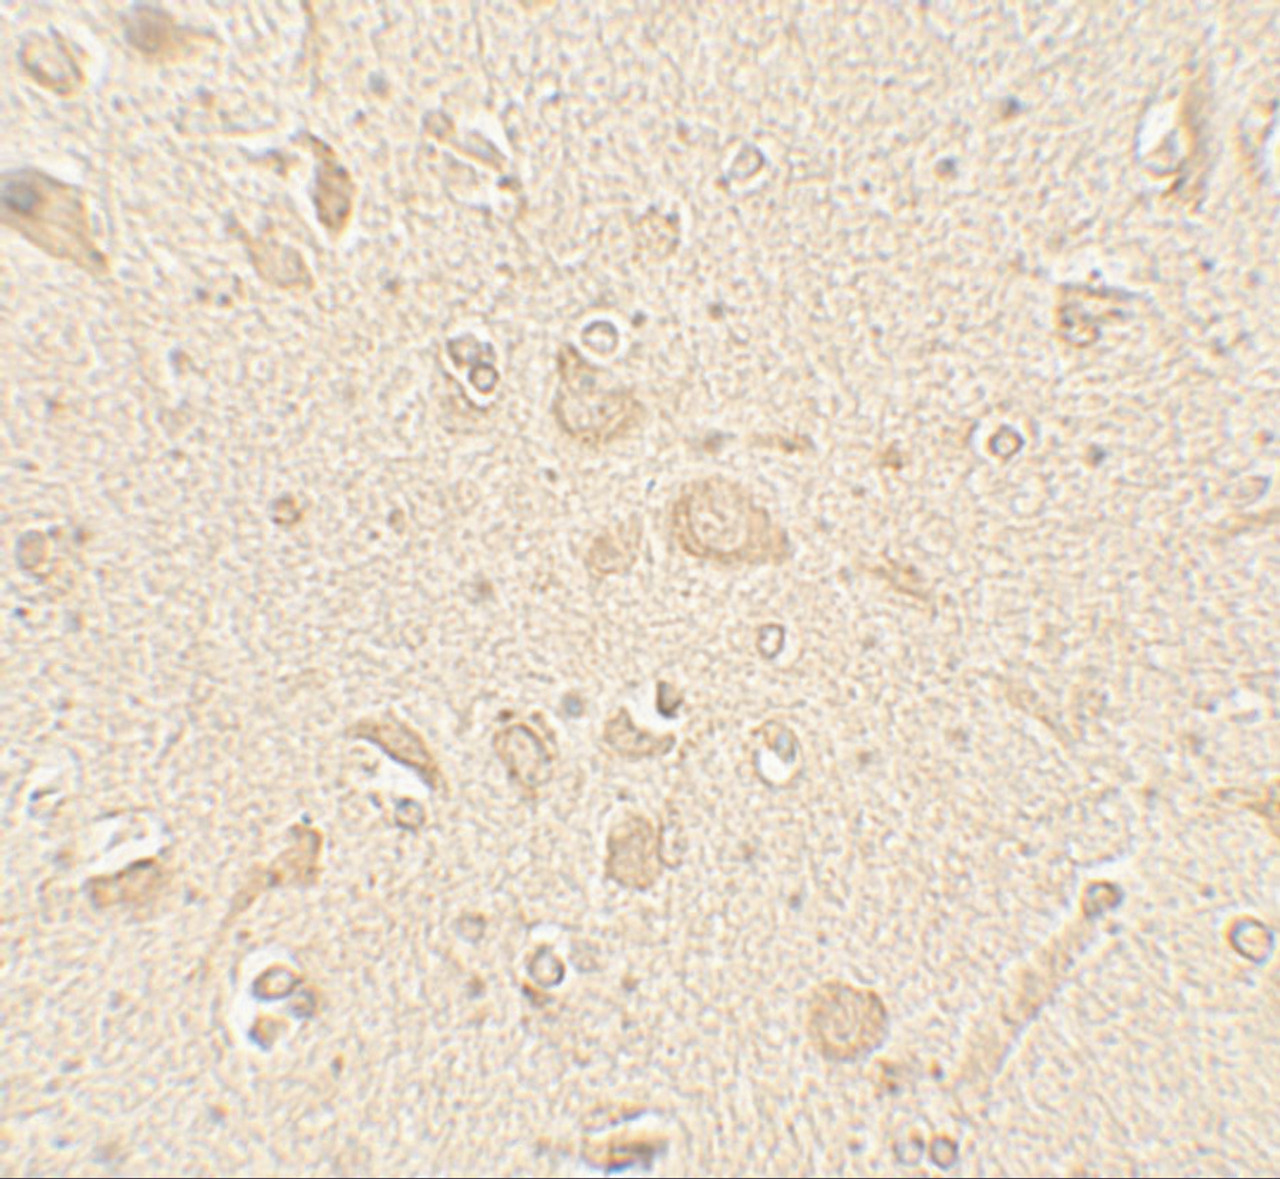 Immunohistochemistry of MAP1LC3B in human brain tissue with MAP1LC3B antibody at 5 ug/mL.